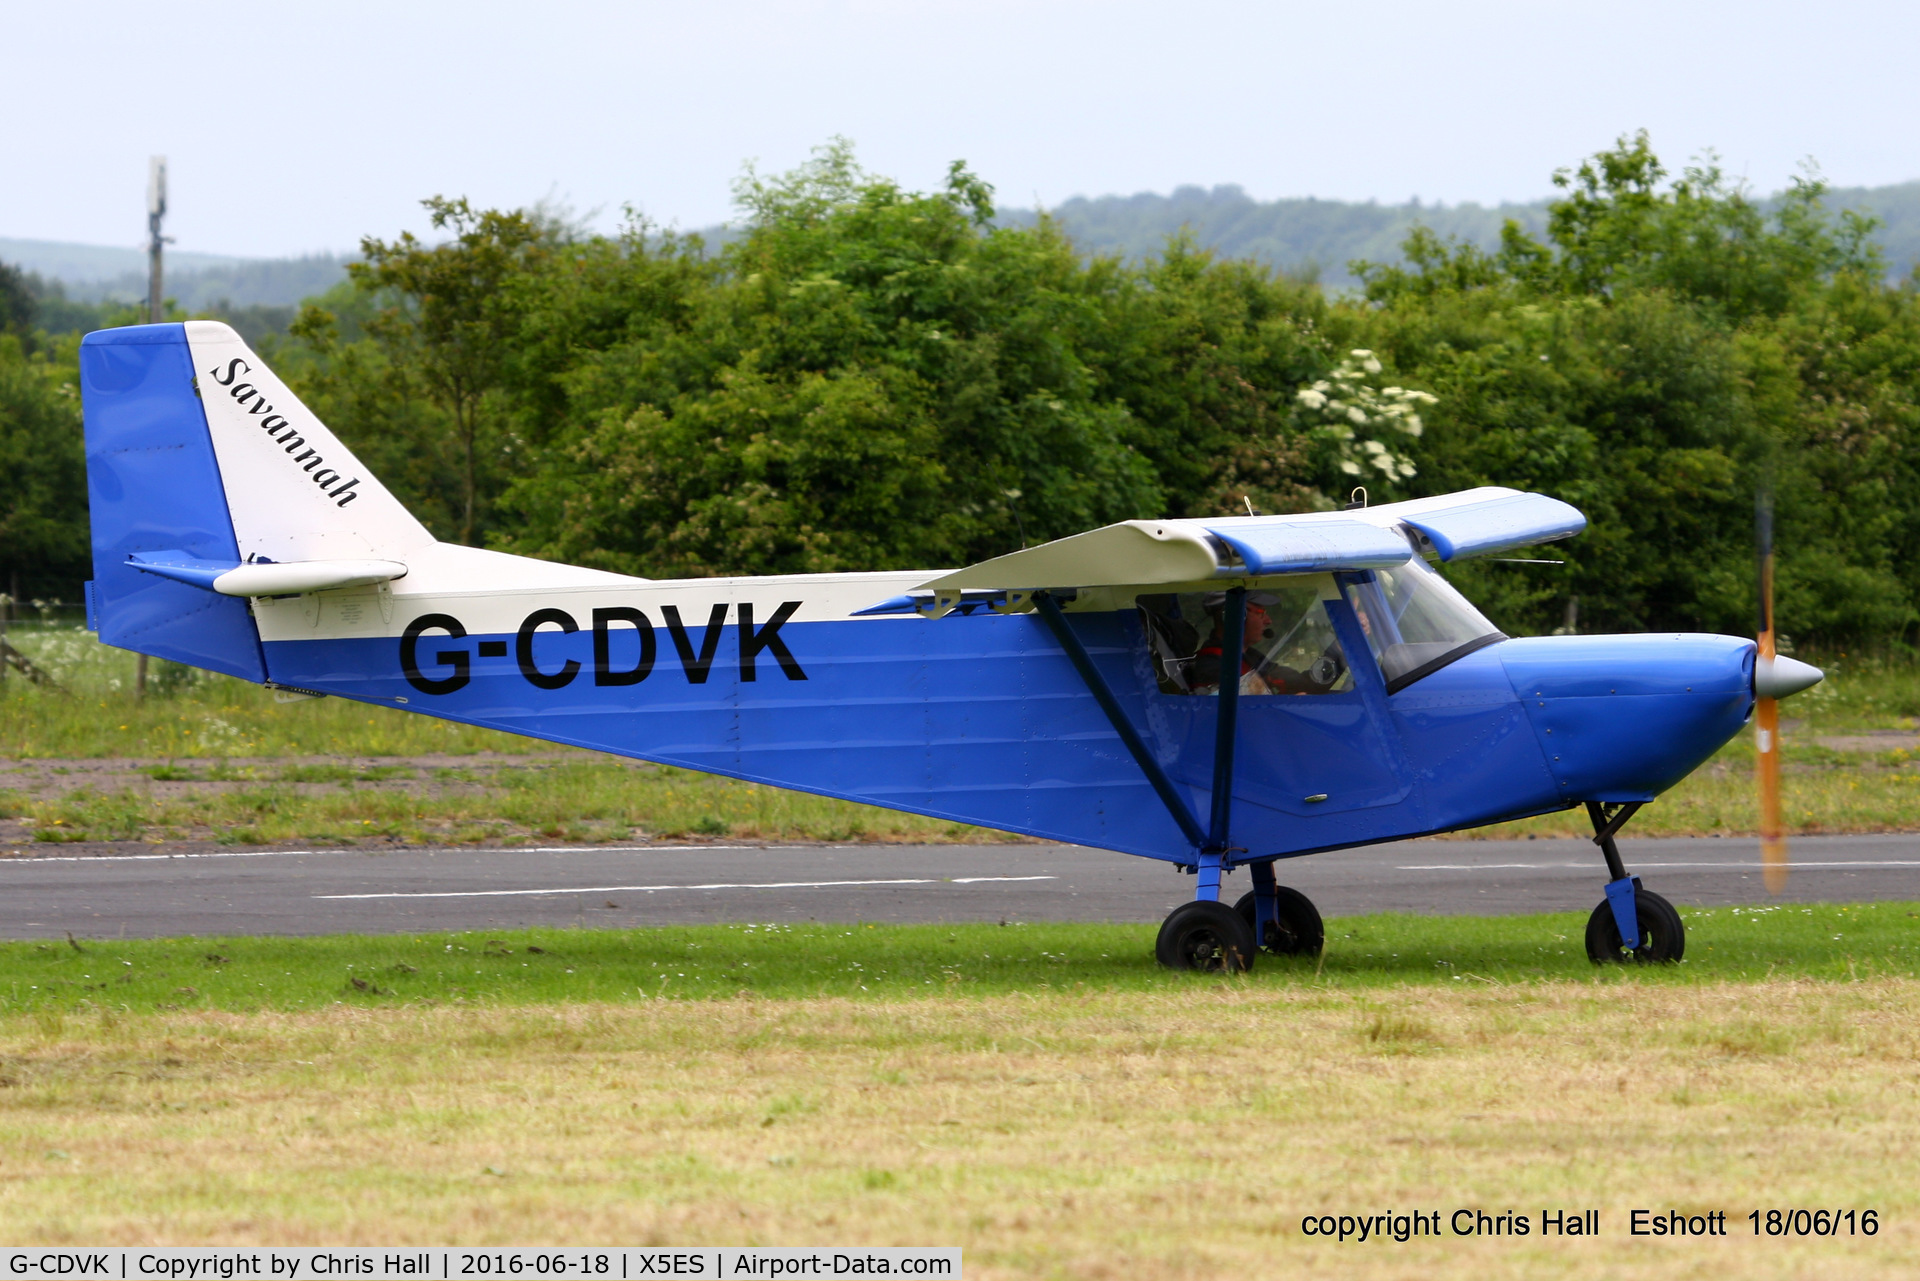 G-CDVK, 2006 ICP MXP-740 Savannah Jabiru(5) C/N BMAA/HB/449, at the Great North Fly in. Eshott